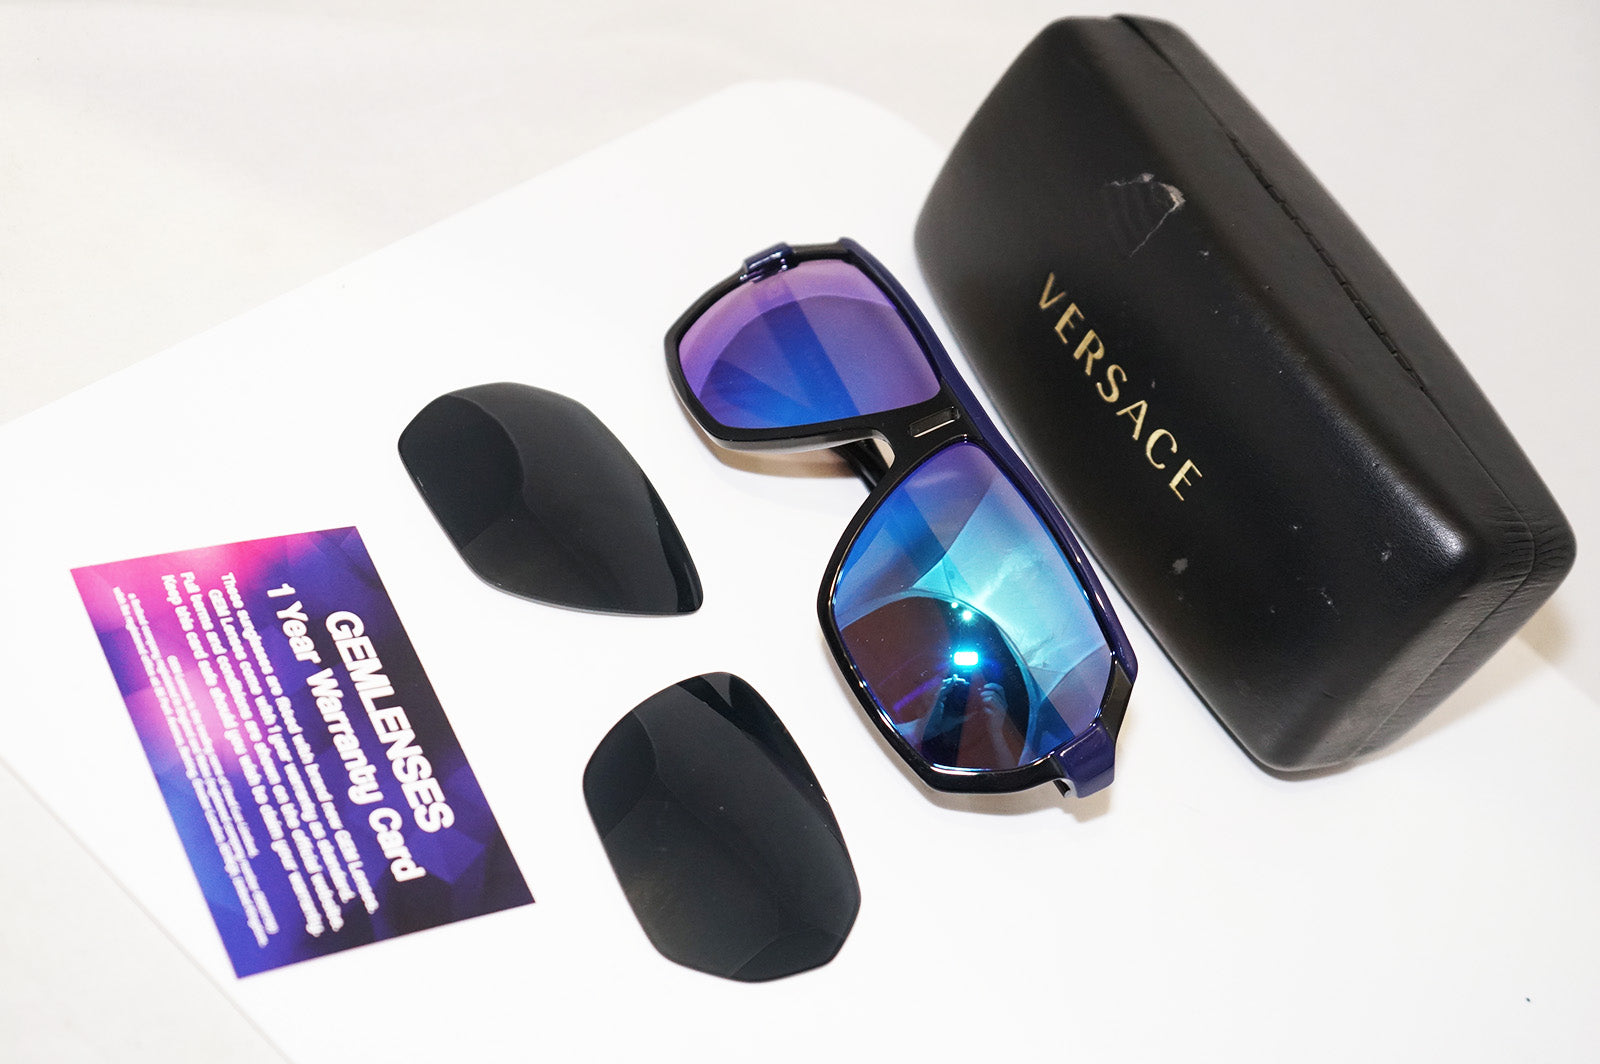 Versace - Sunglasses Versace V-Matrix - Blue - Sunglasses - Versace Eyewear  - Avvenice